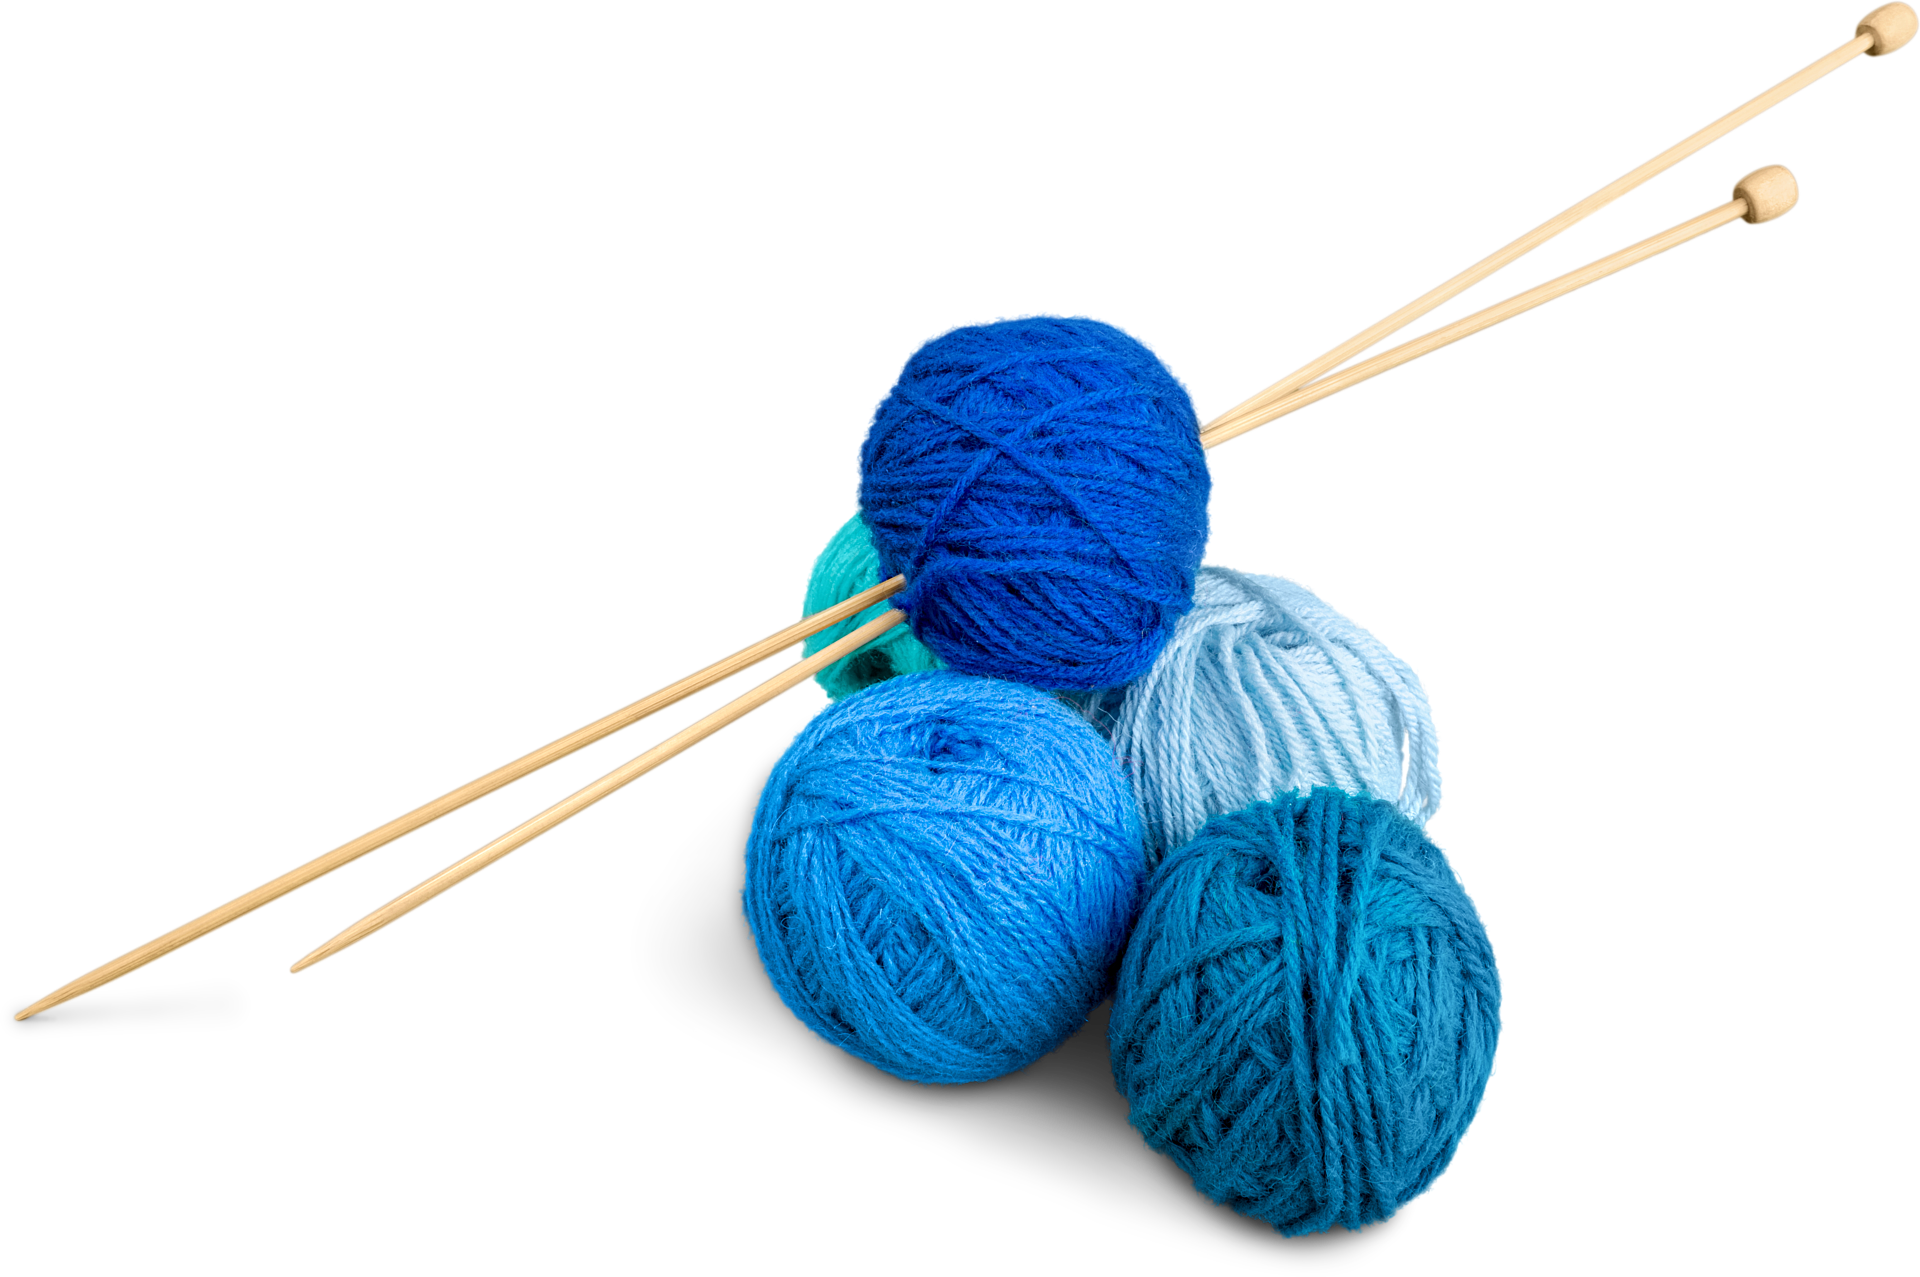 Colorful Yarn Balls With Knitting Needles